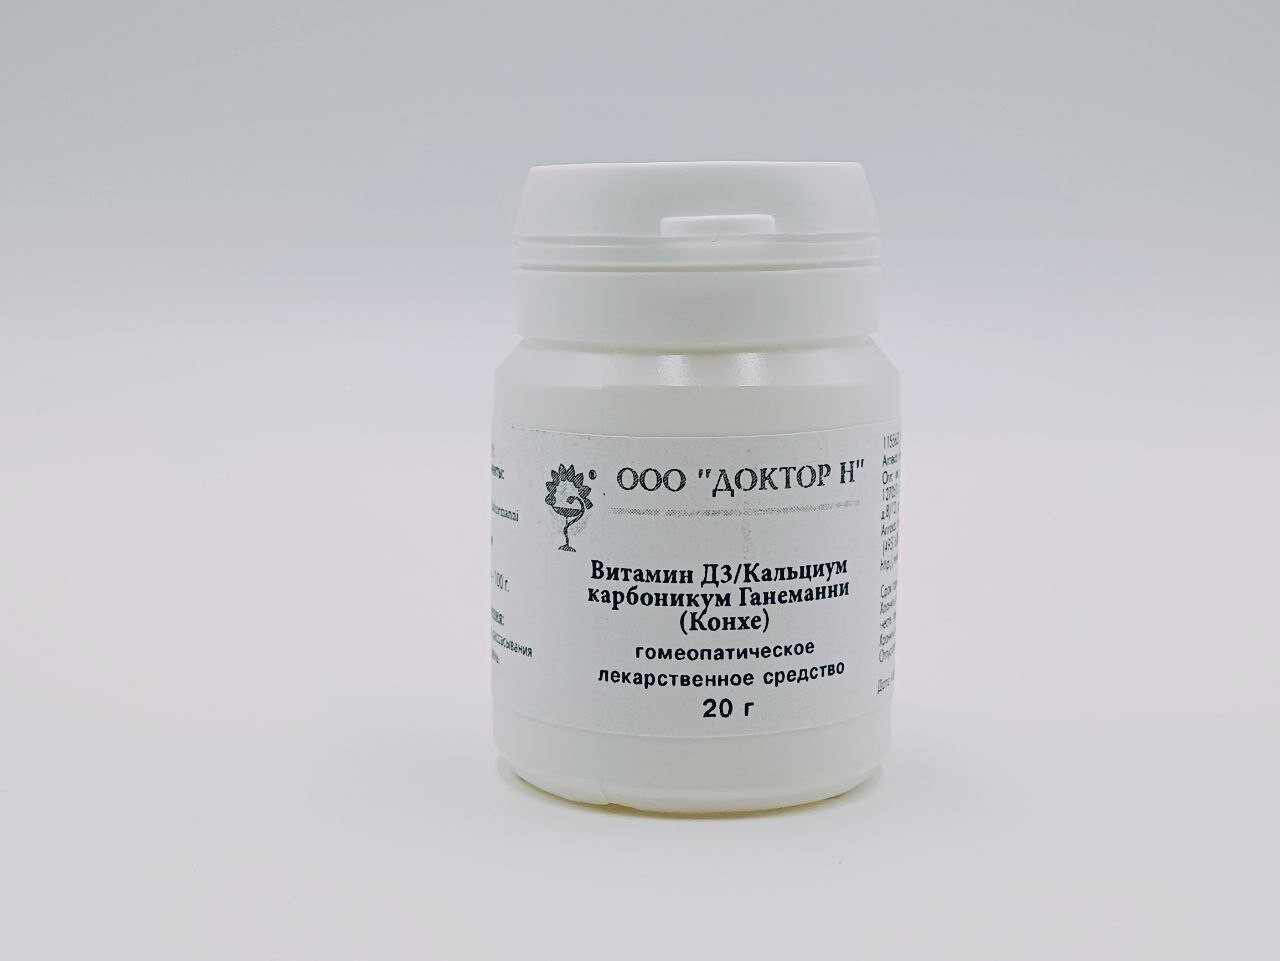 Витамин Д3/ Кальциум карбоникум Ганеманни